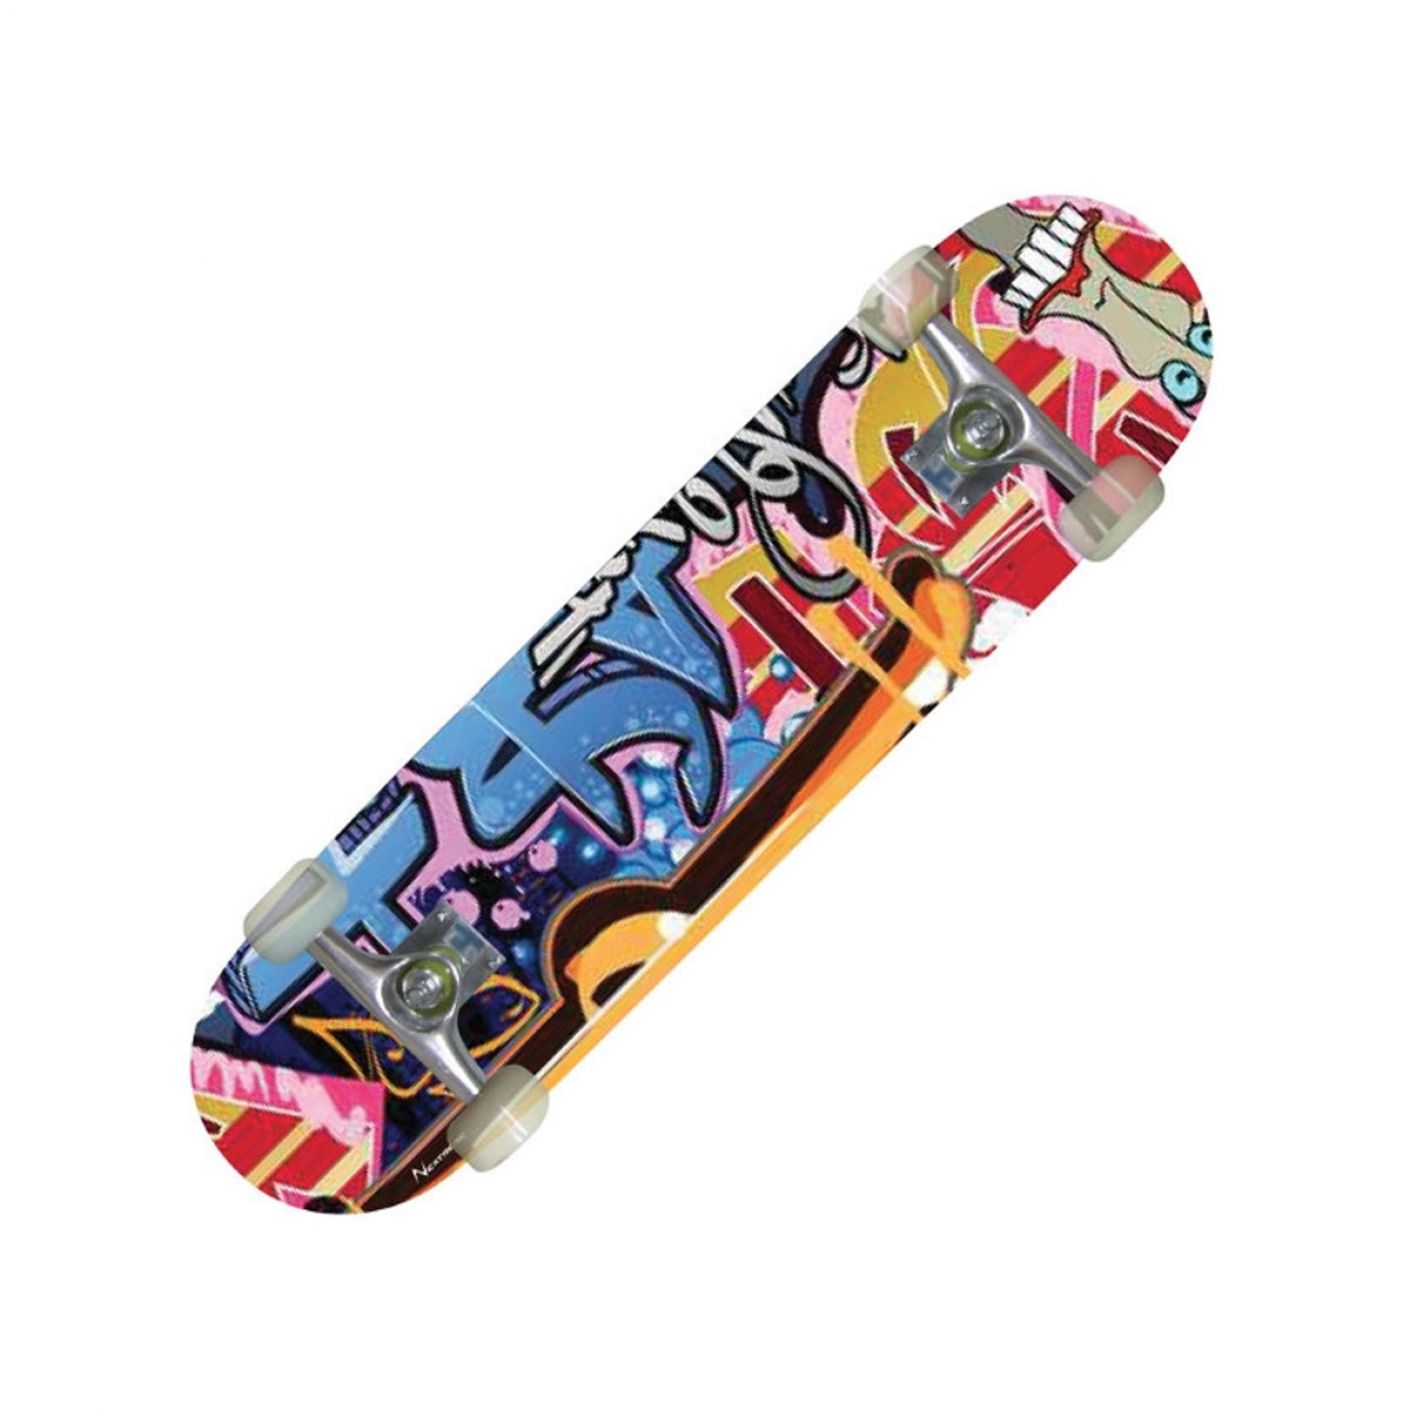 Garlando Skateboard Street Pro con Graffiti